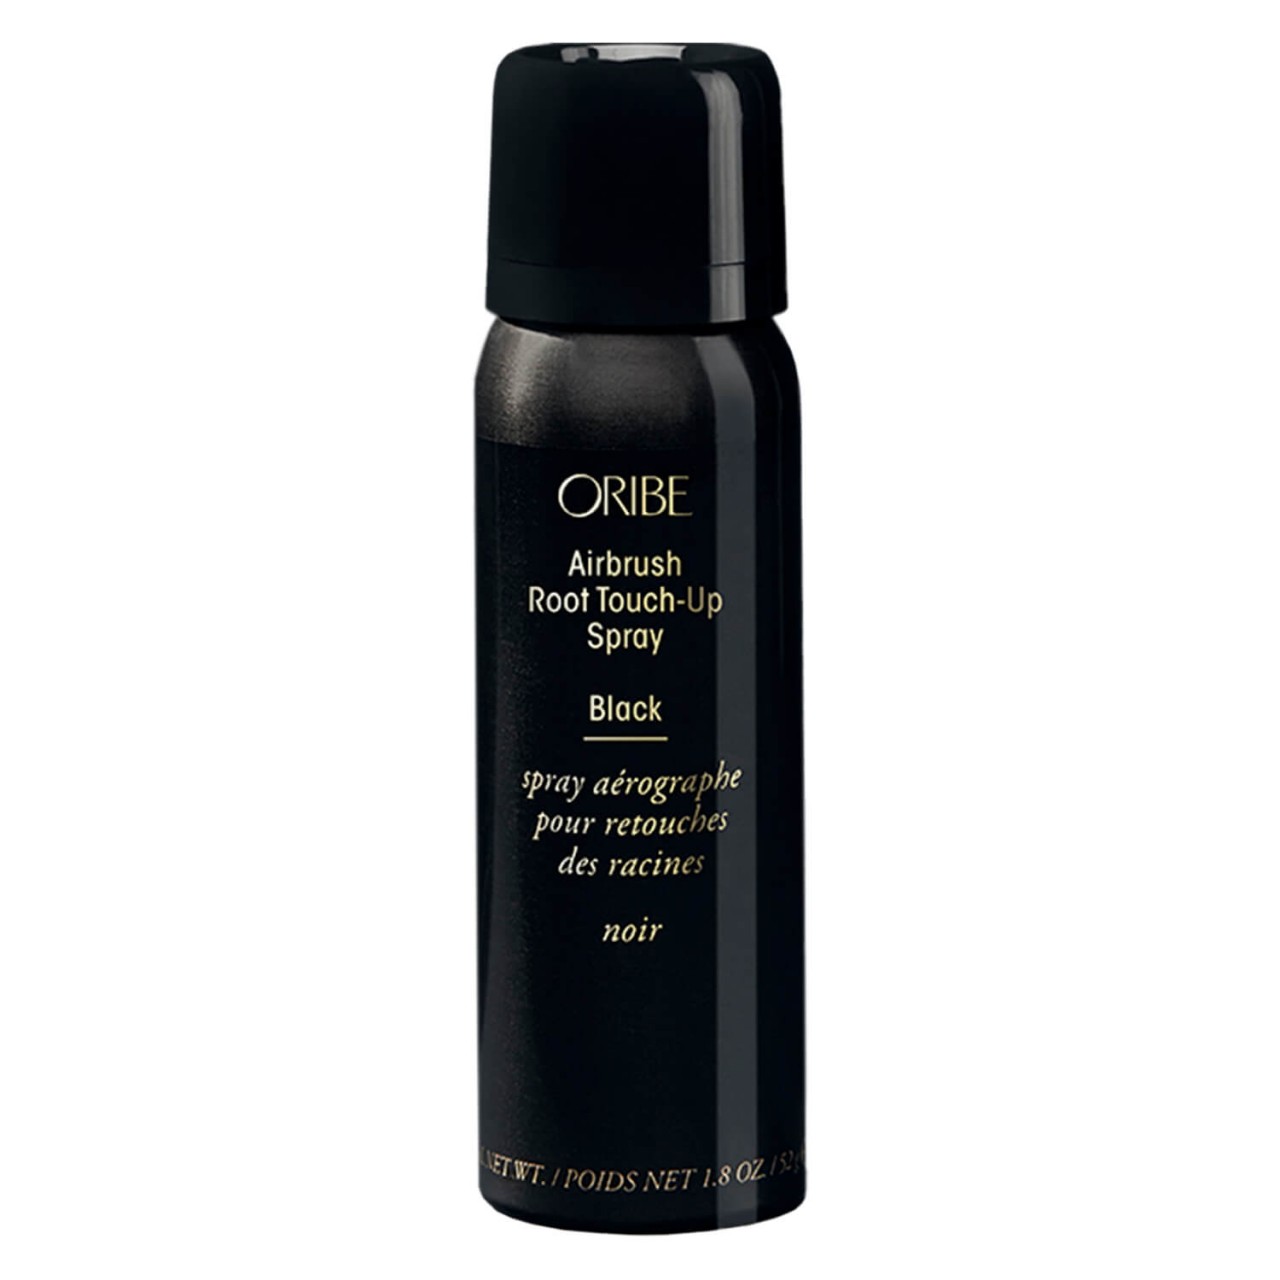 Oribe Style - Airbrush Root Touch-Up Spray Black von Oribe